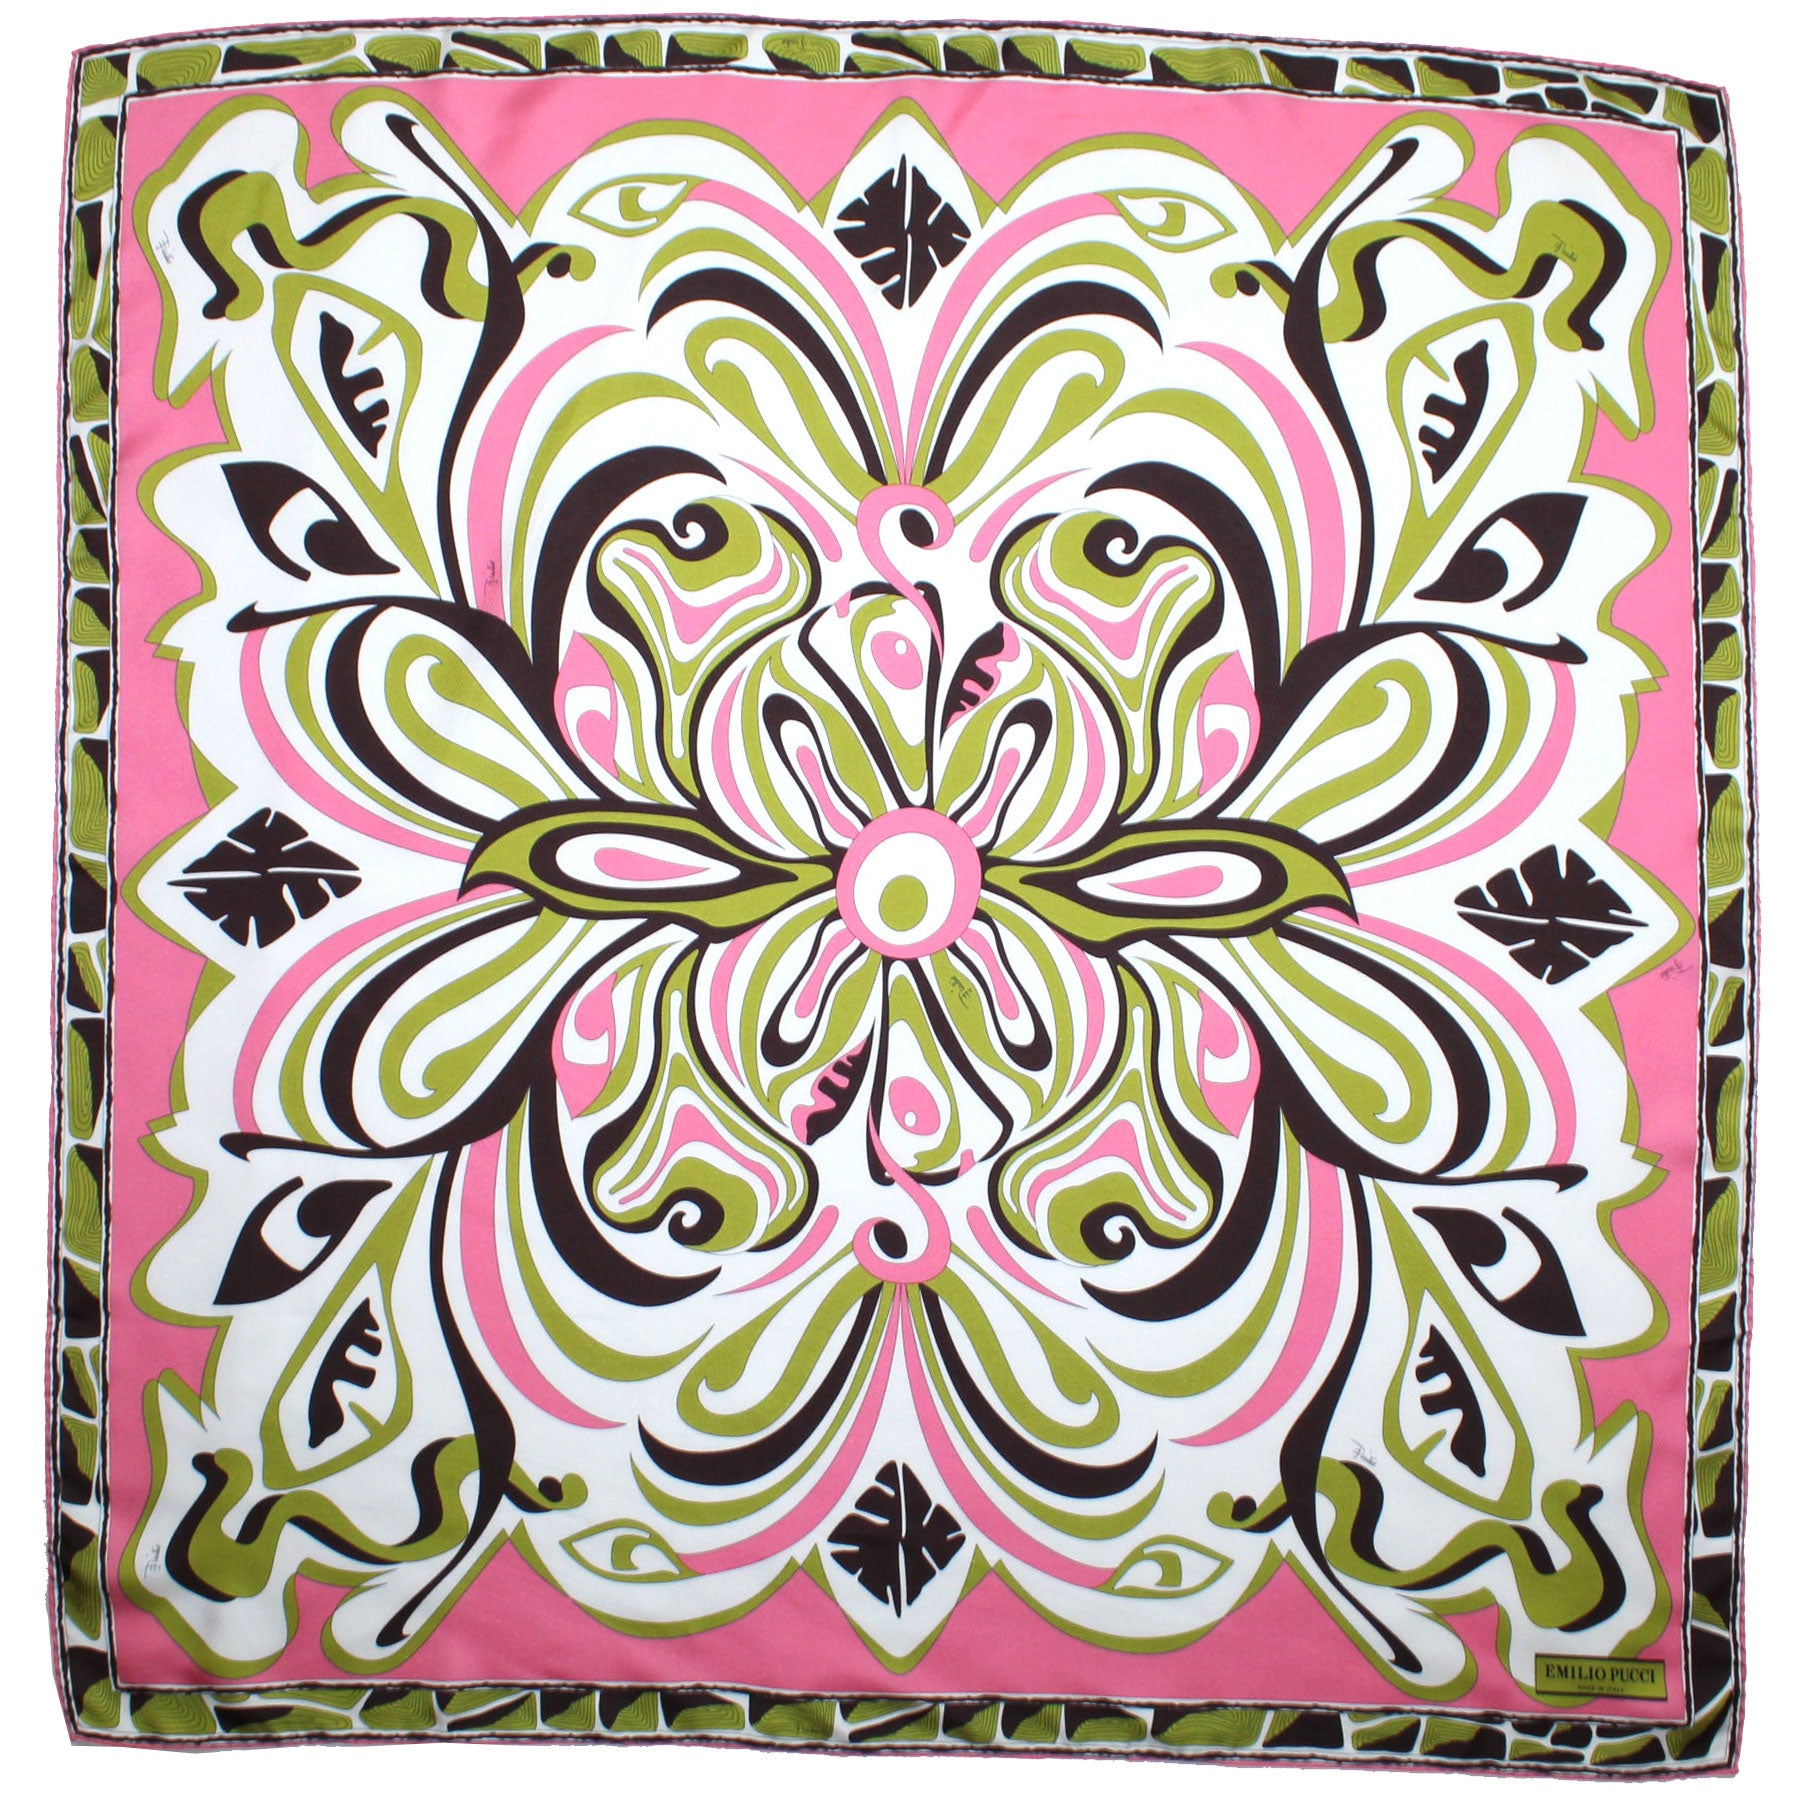 Emilio Pucci Scarf Pink Lime Black Swirl Floral - Twill Silk Square Foulard